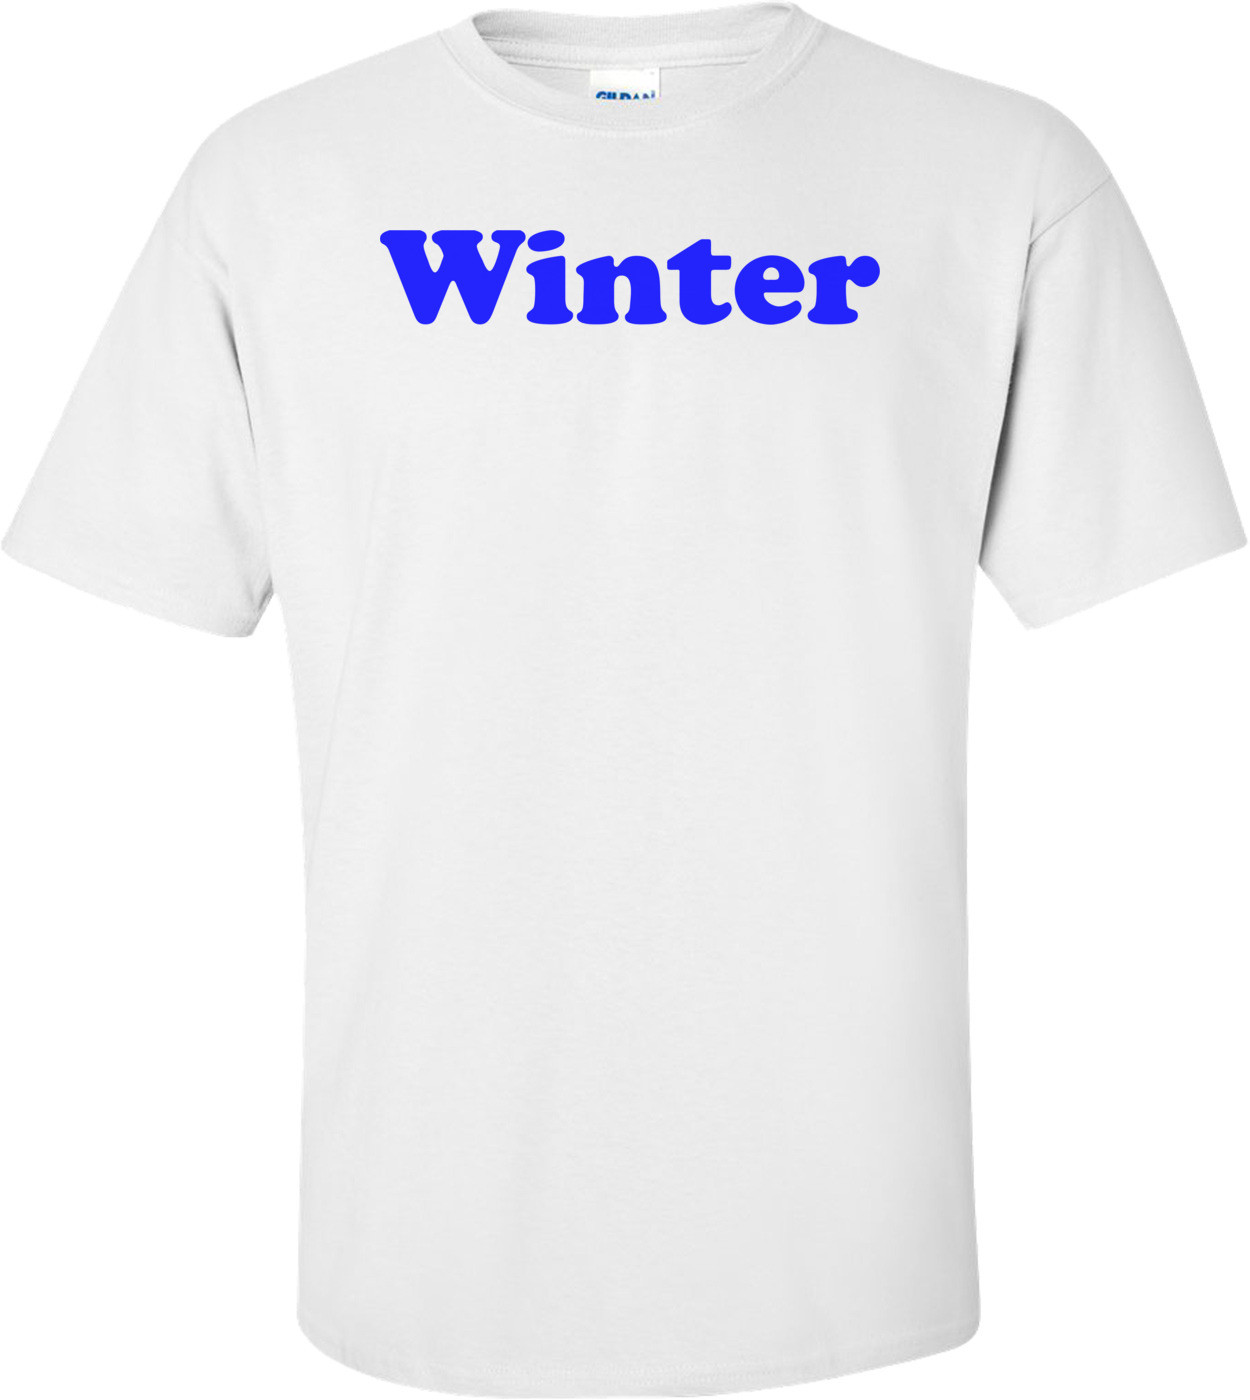 Winter - Maternity Shirt